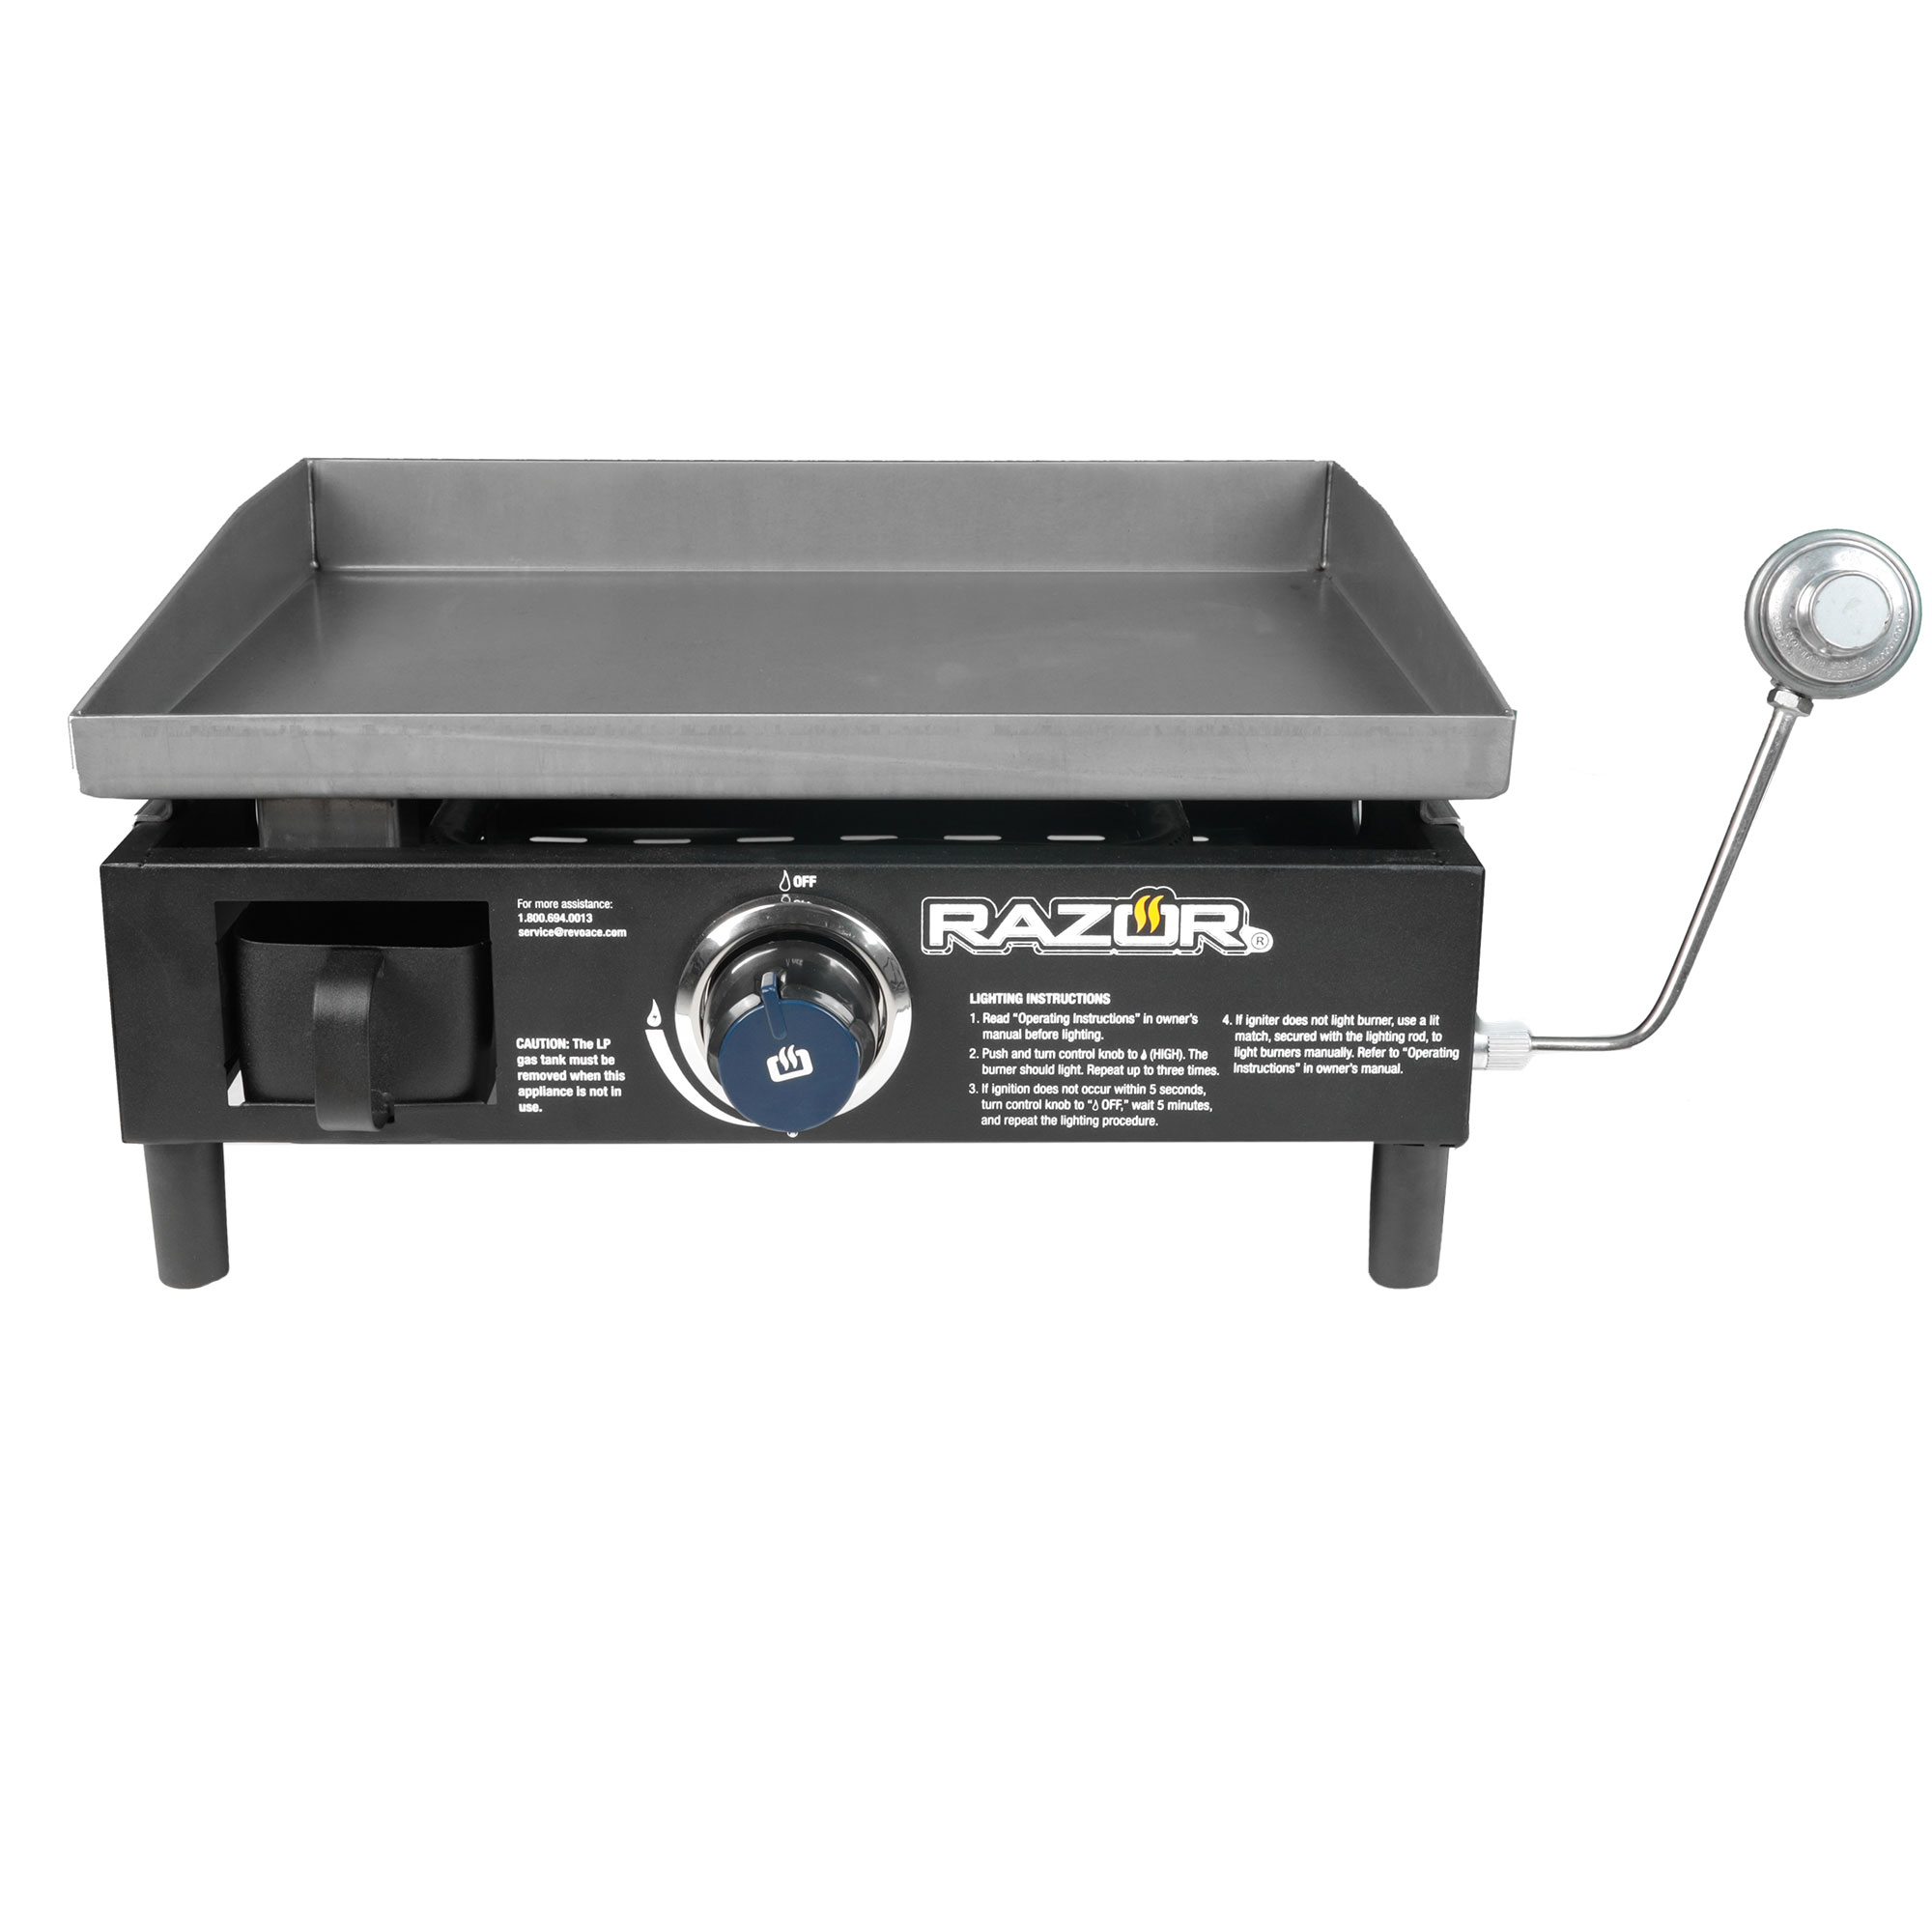 Razor Griddle GGT2160M 19" Portable 1 Burner LP Propane Gas Grill, Steel - image 1 of 13